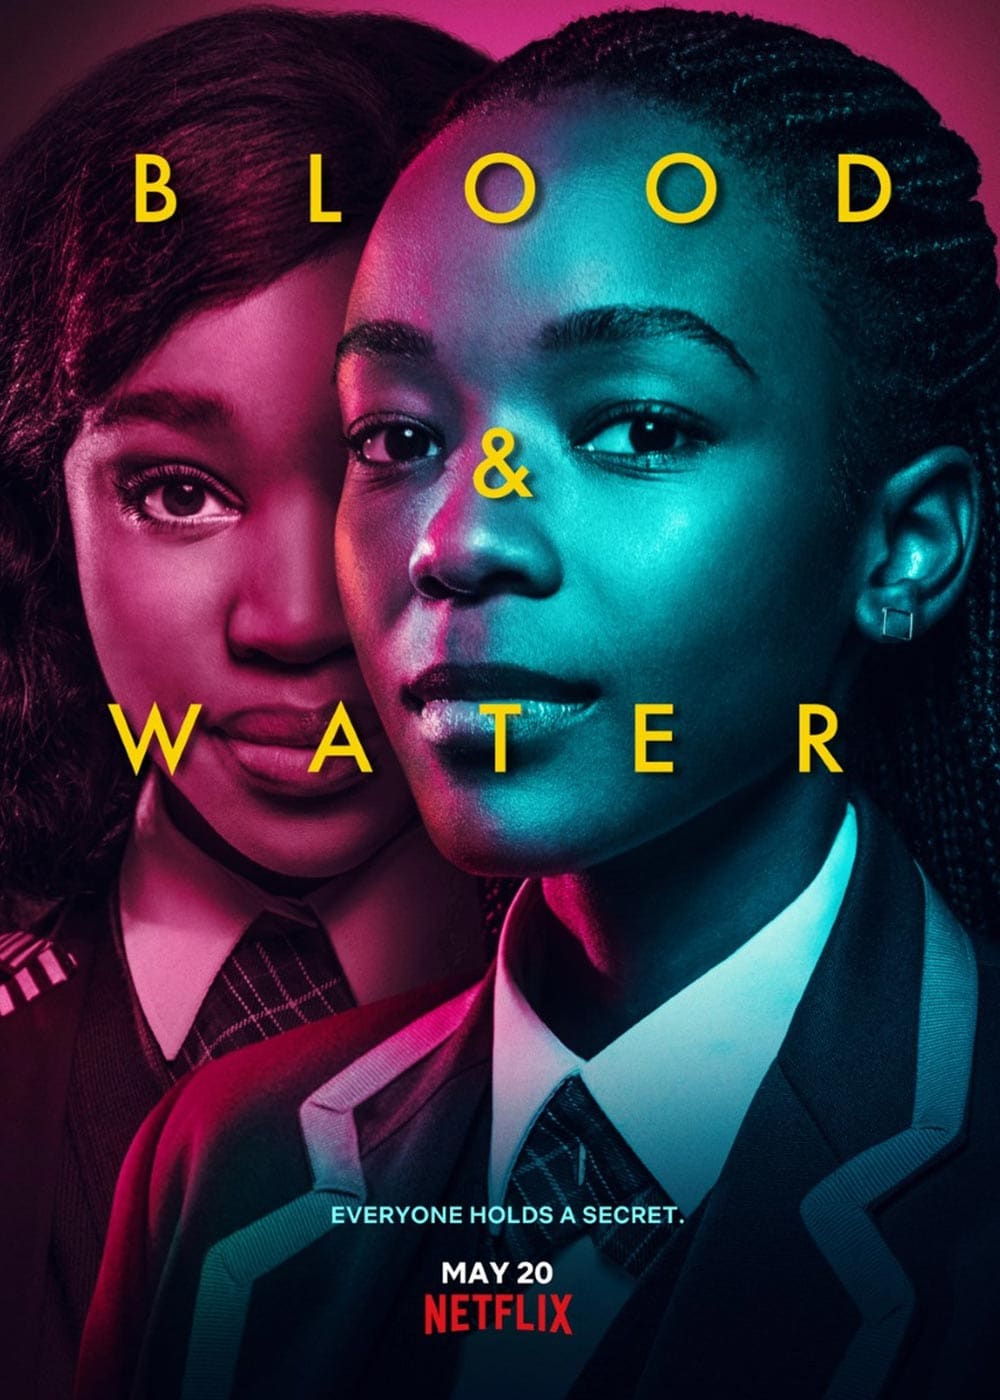 Blood & Water S01 2020 English